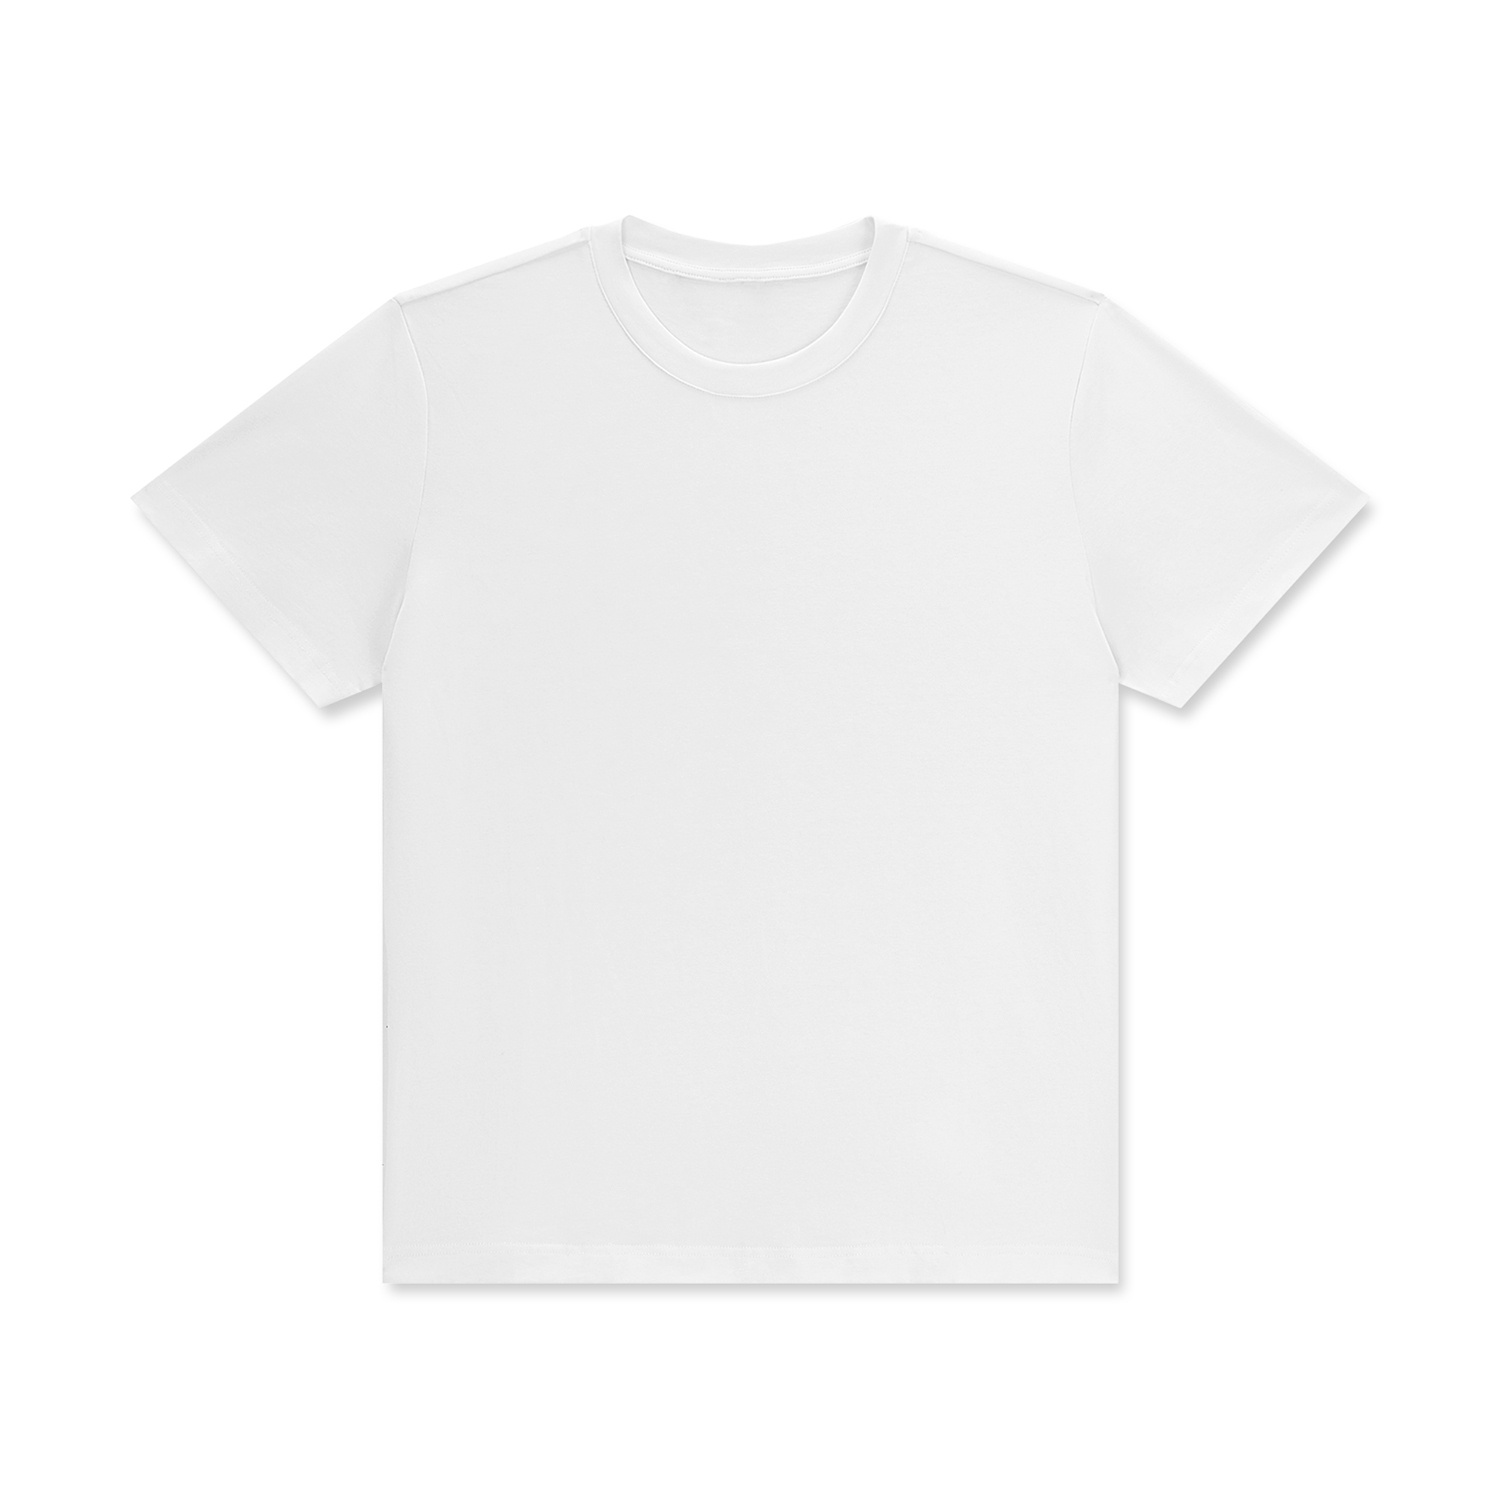 Unisex Classic Crew Neck Cotton T-Shirt for Retail Stores